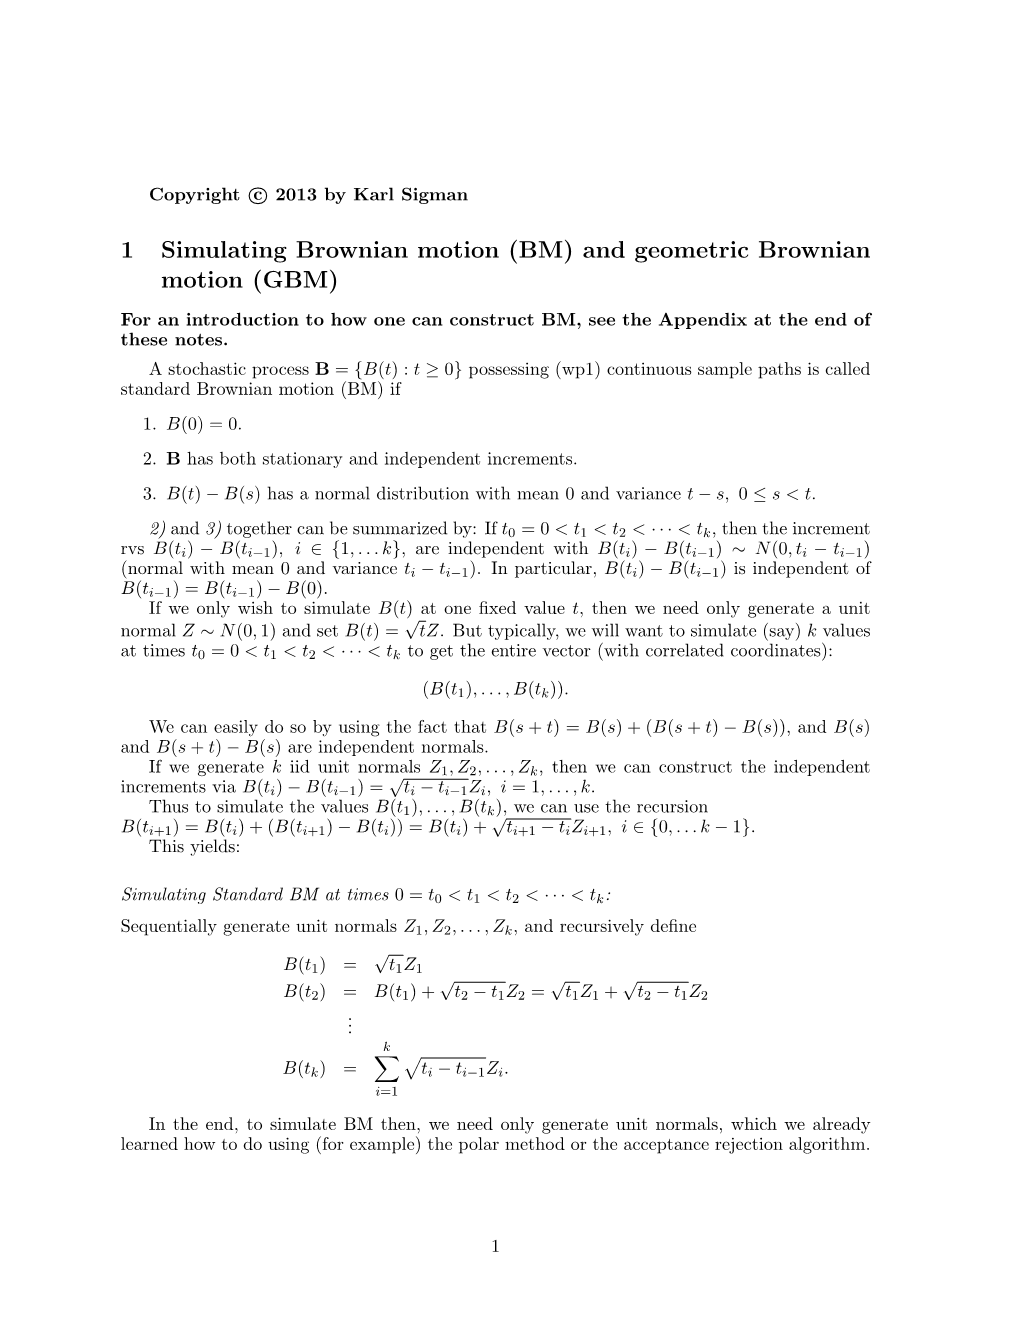 BM) and Geometric Brownian Motion (GBM